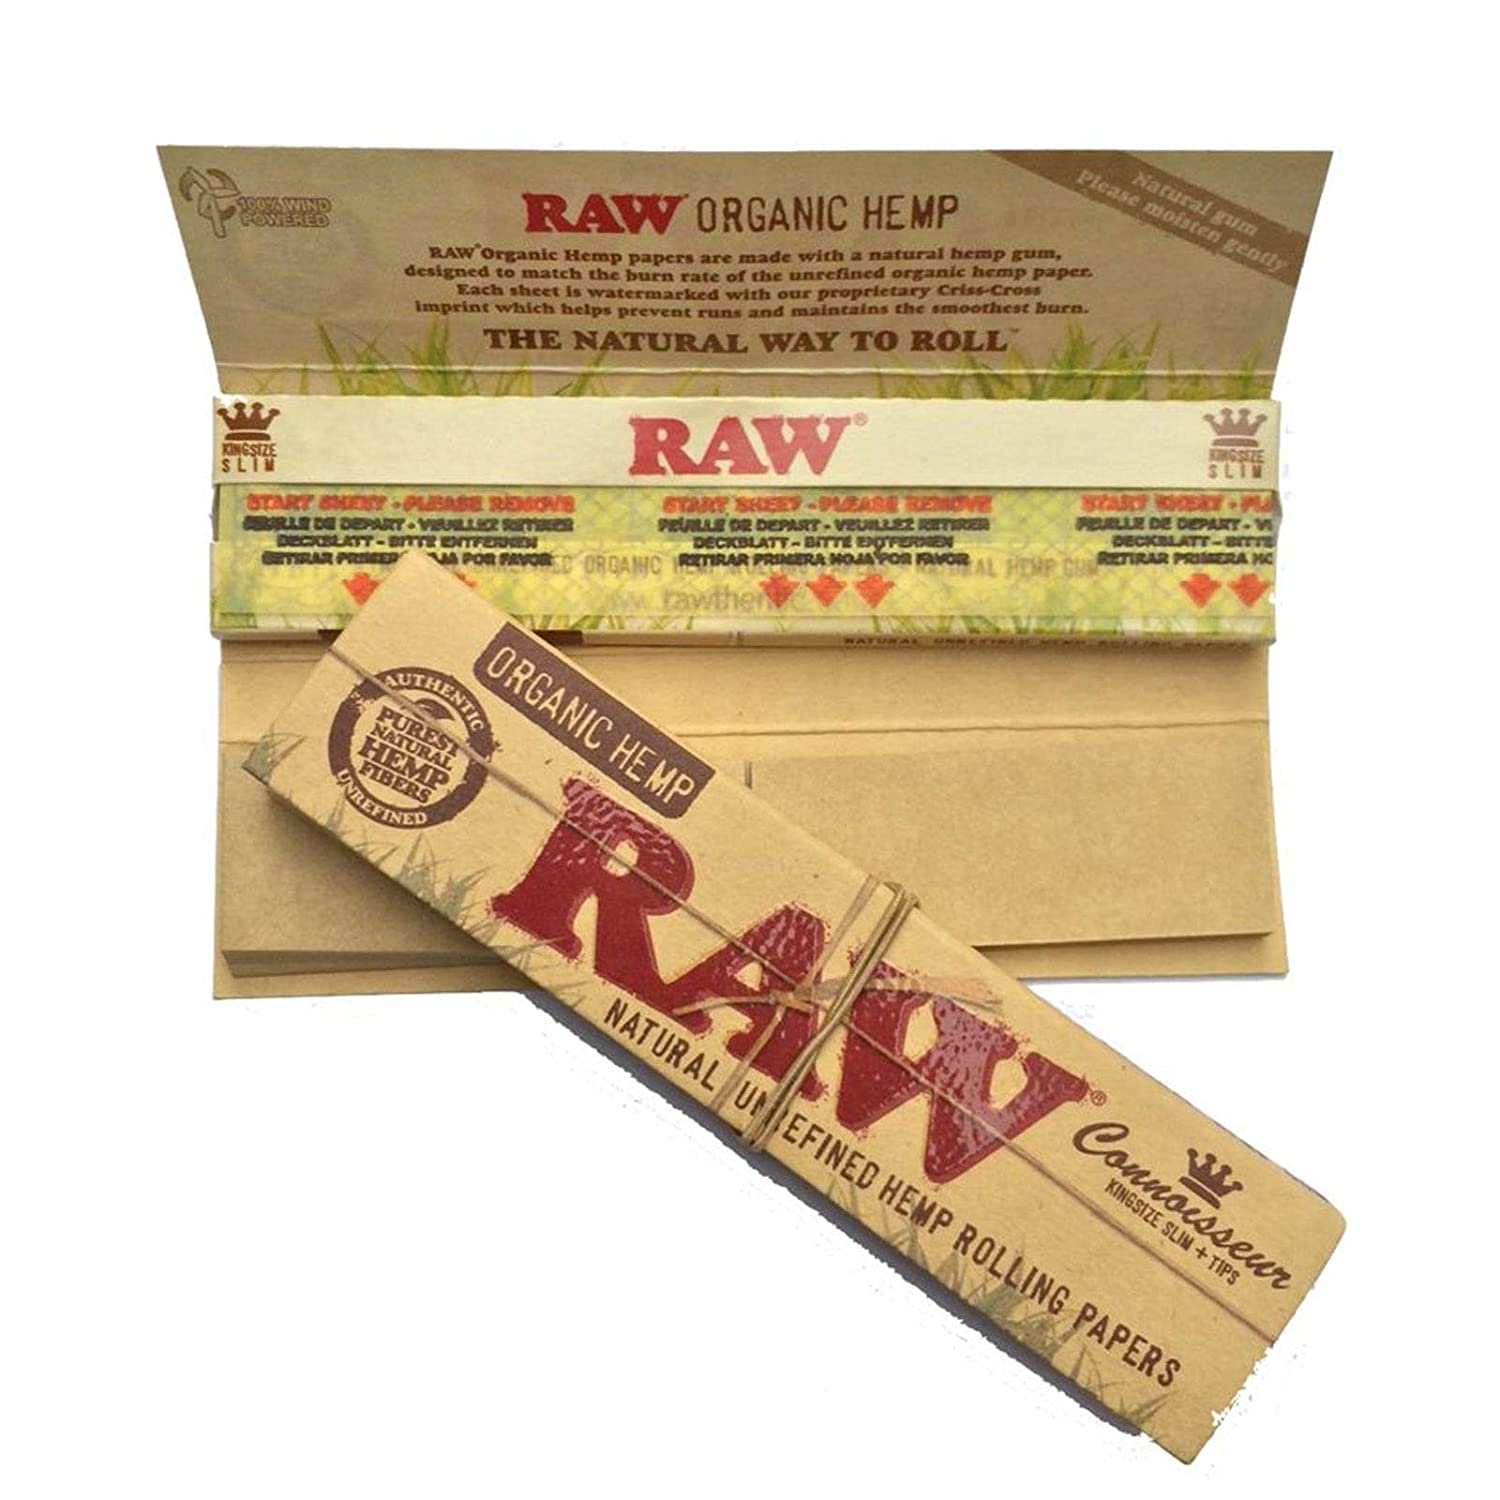 Raw Organic Hemp Connoisseur King Size Slim + Tips 24 per Box